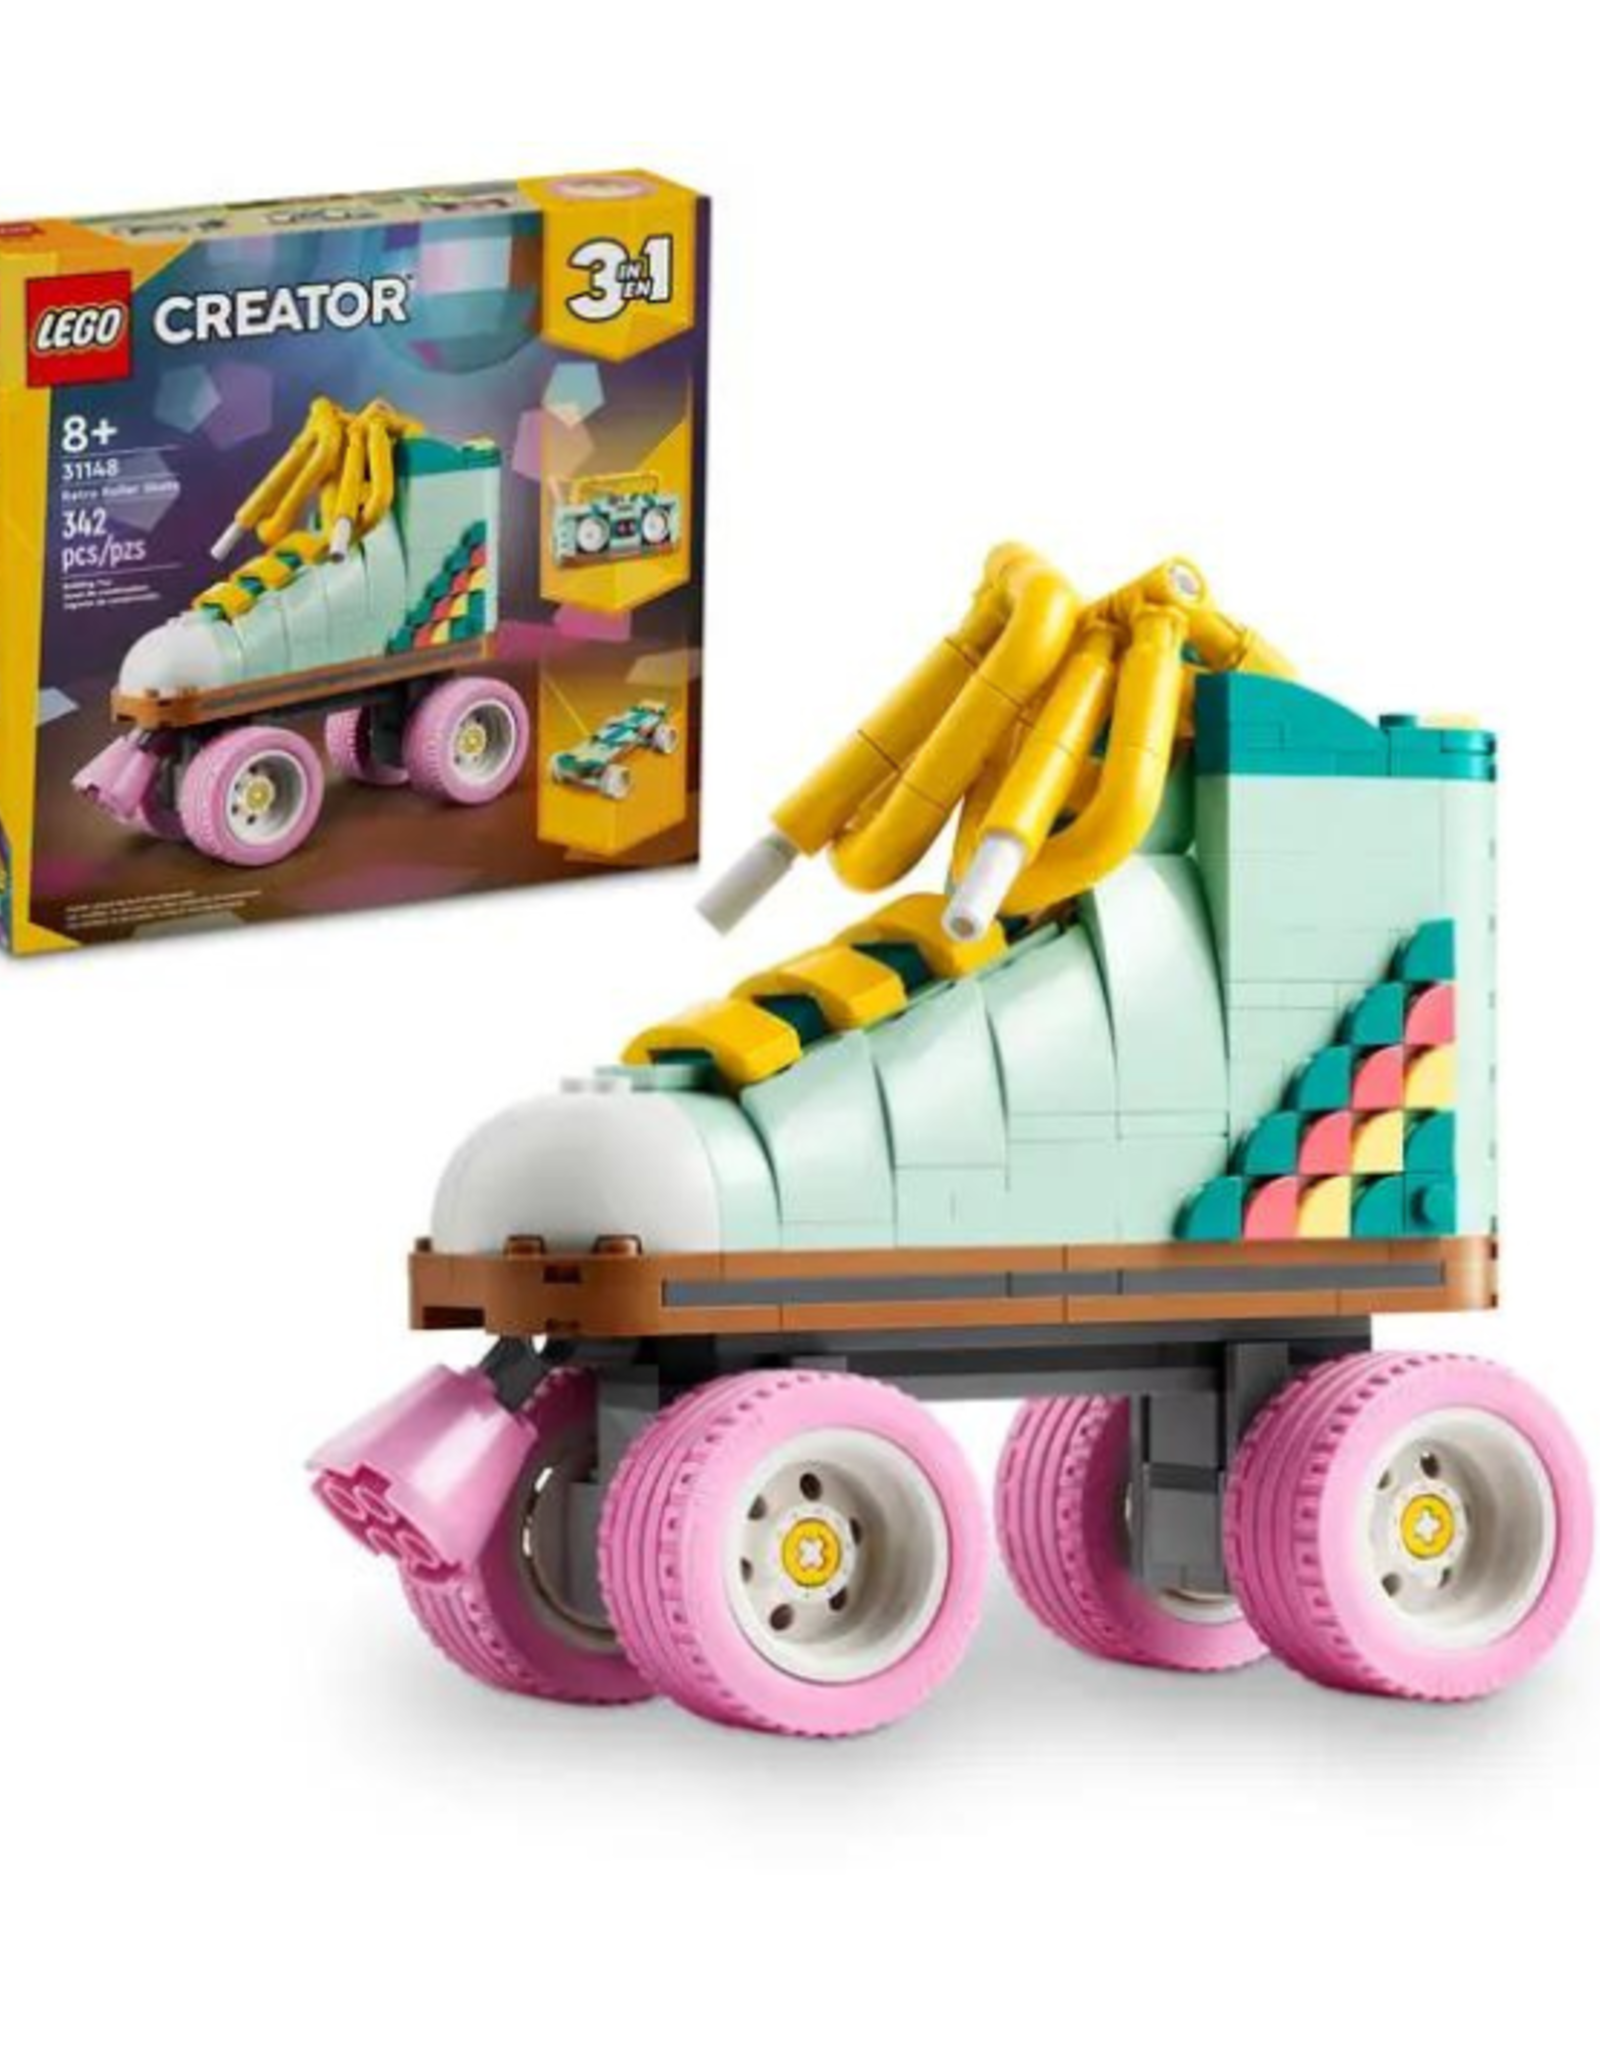 Lego Lego - Creator 3in1 - 31148 - Retro Roller Skate